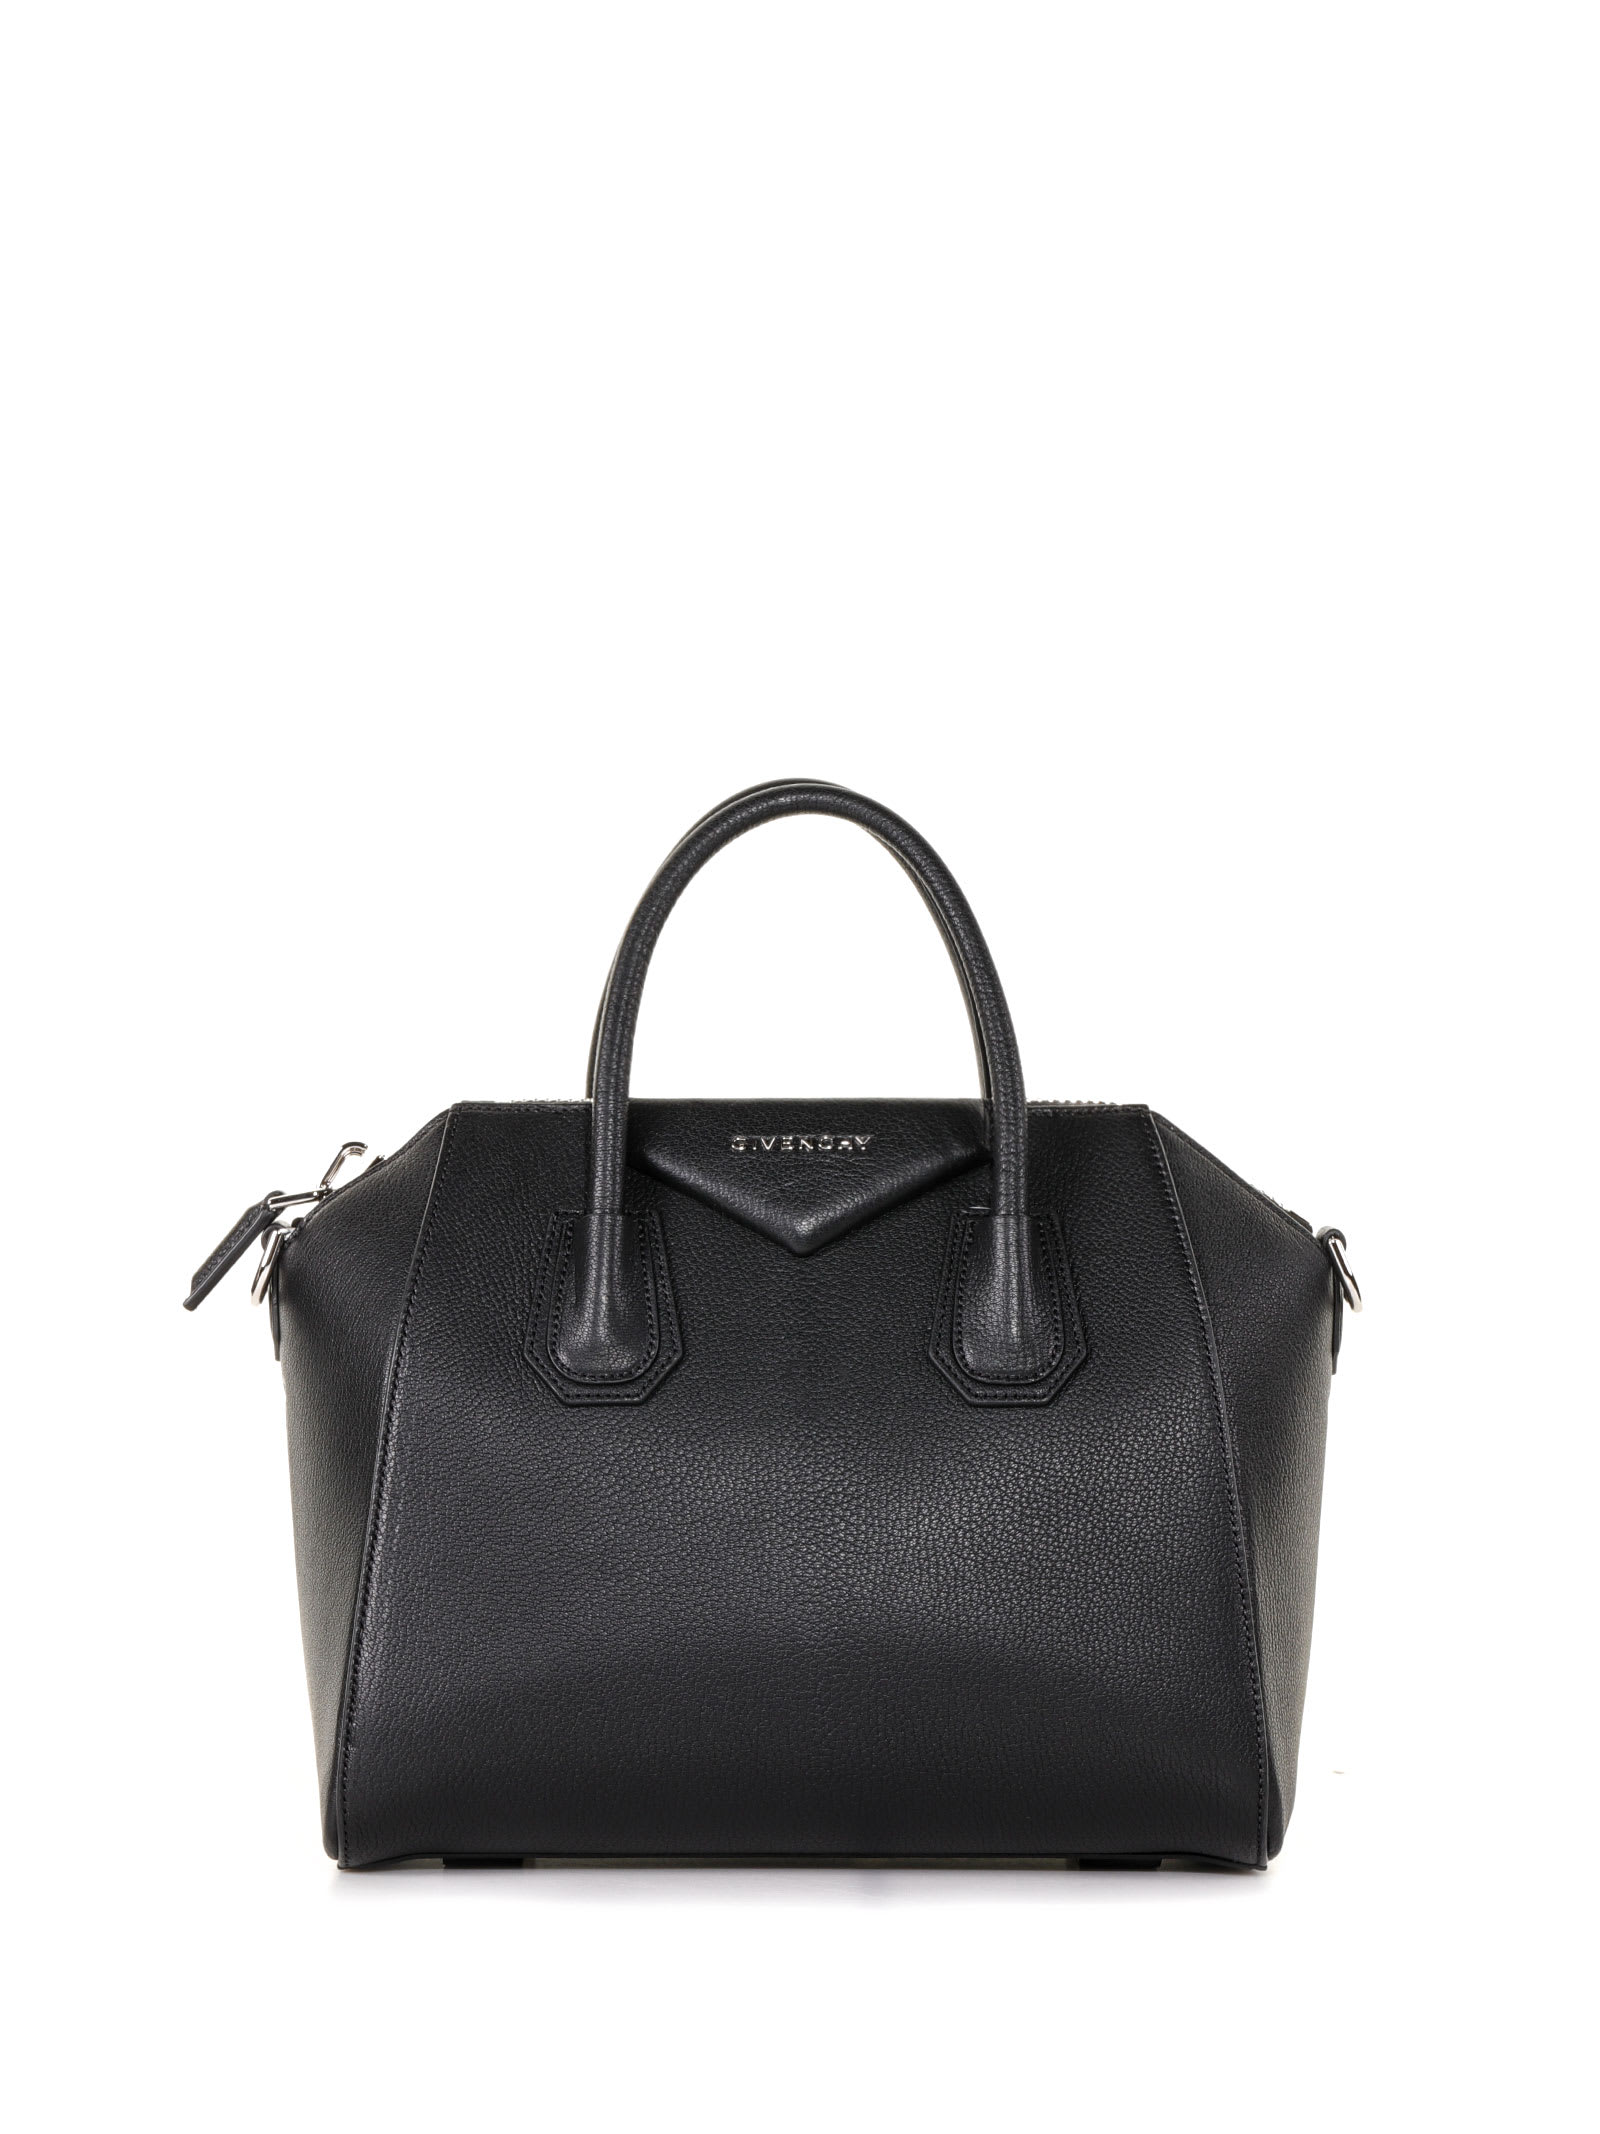 Givenchy Small Antigona Bag With Shoulder Strap